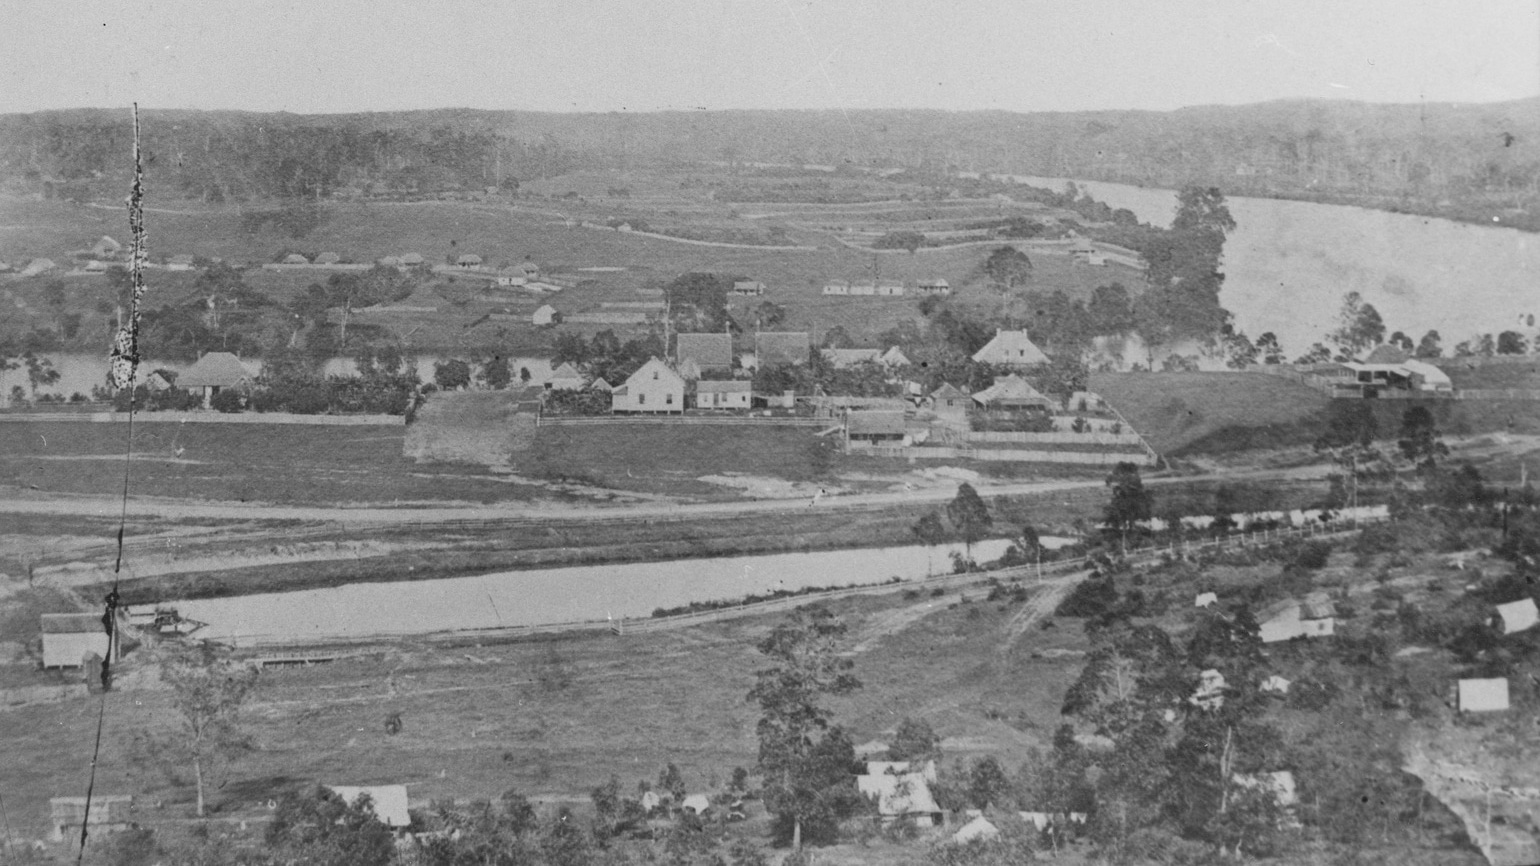 Roma Street Reservoir during the early settlement of Brisbane, ca. 1862